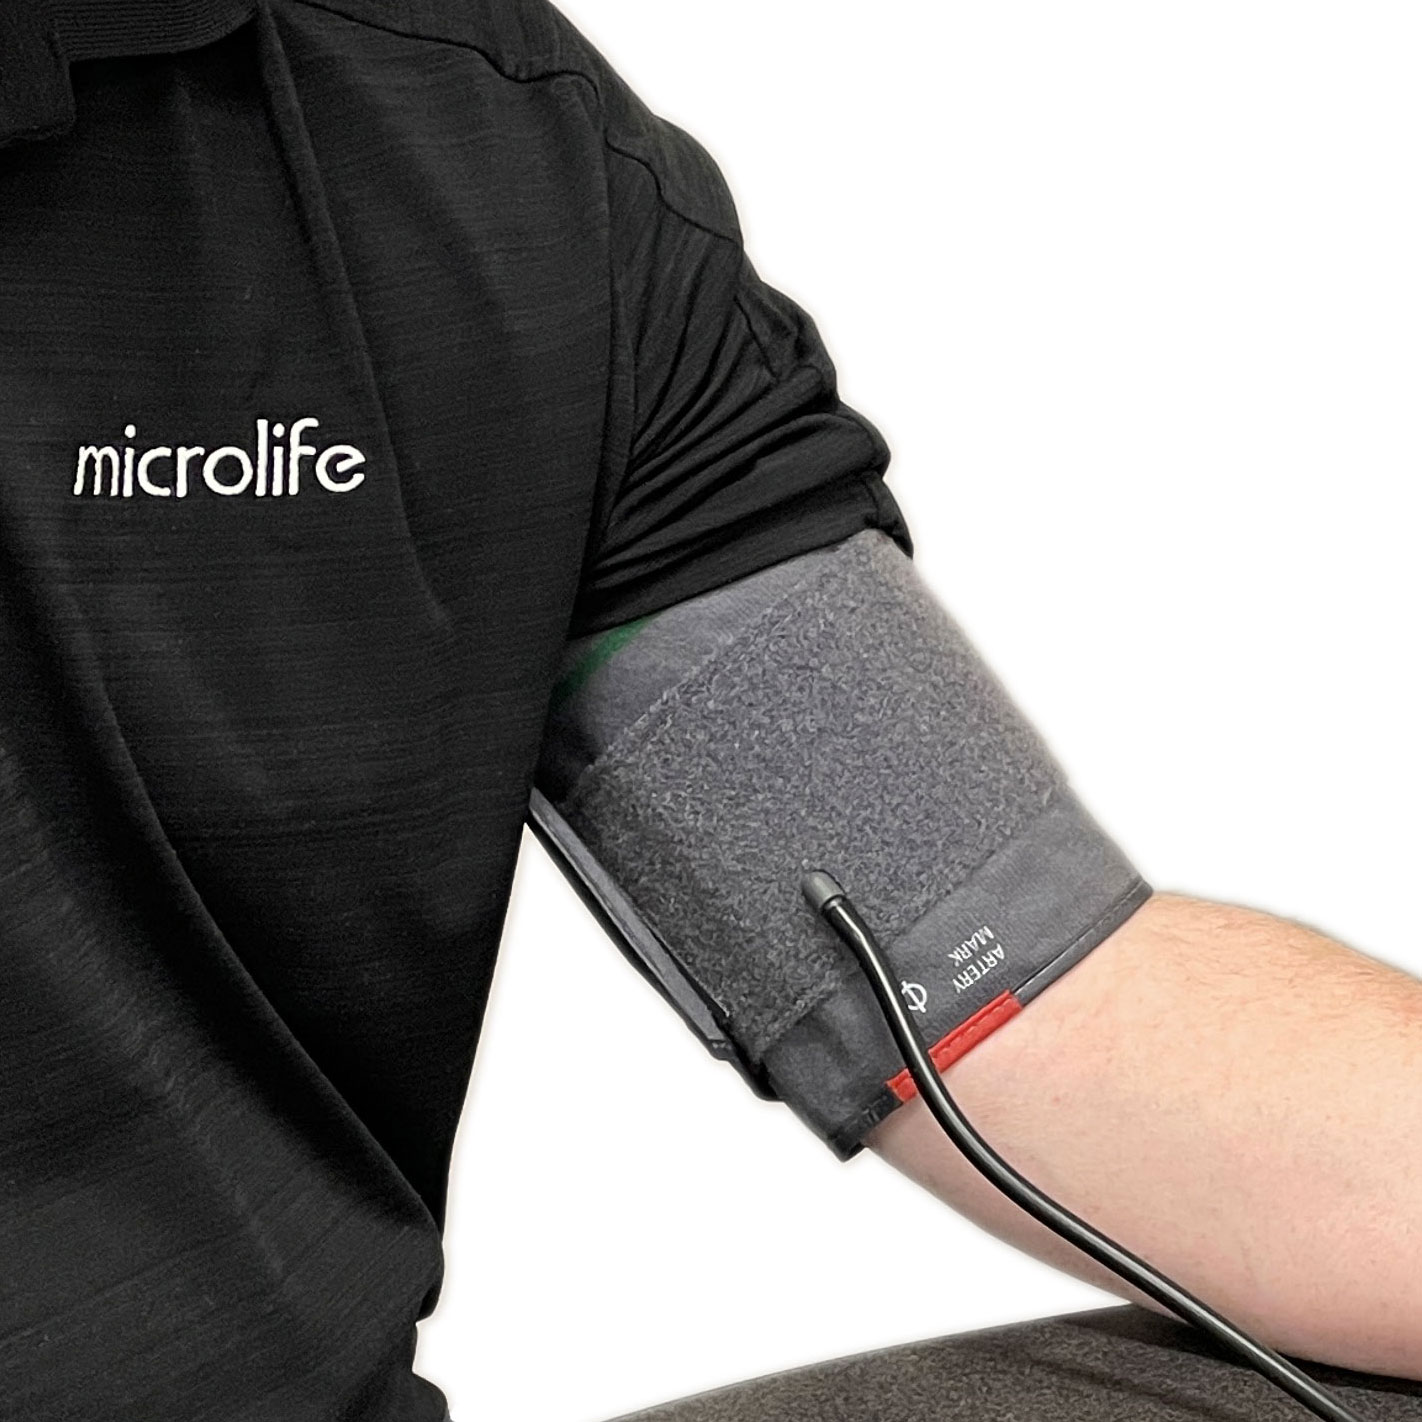 UltraSoft® Extra-Large Blood Pressure Upper Arm Cuff